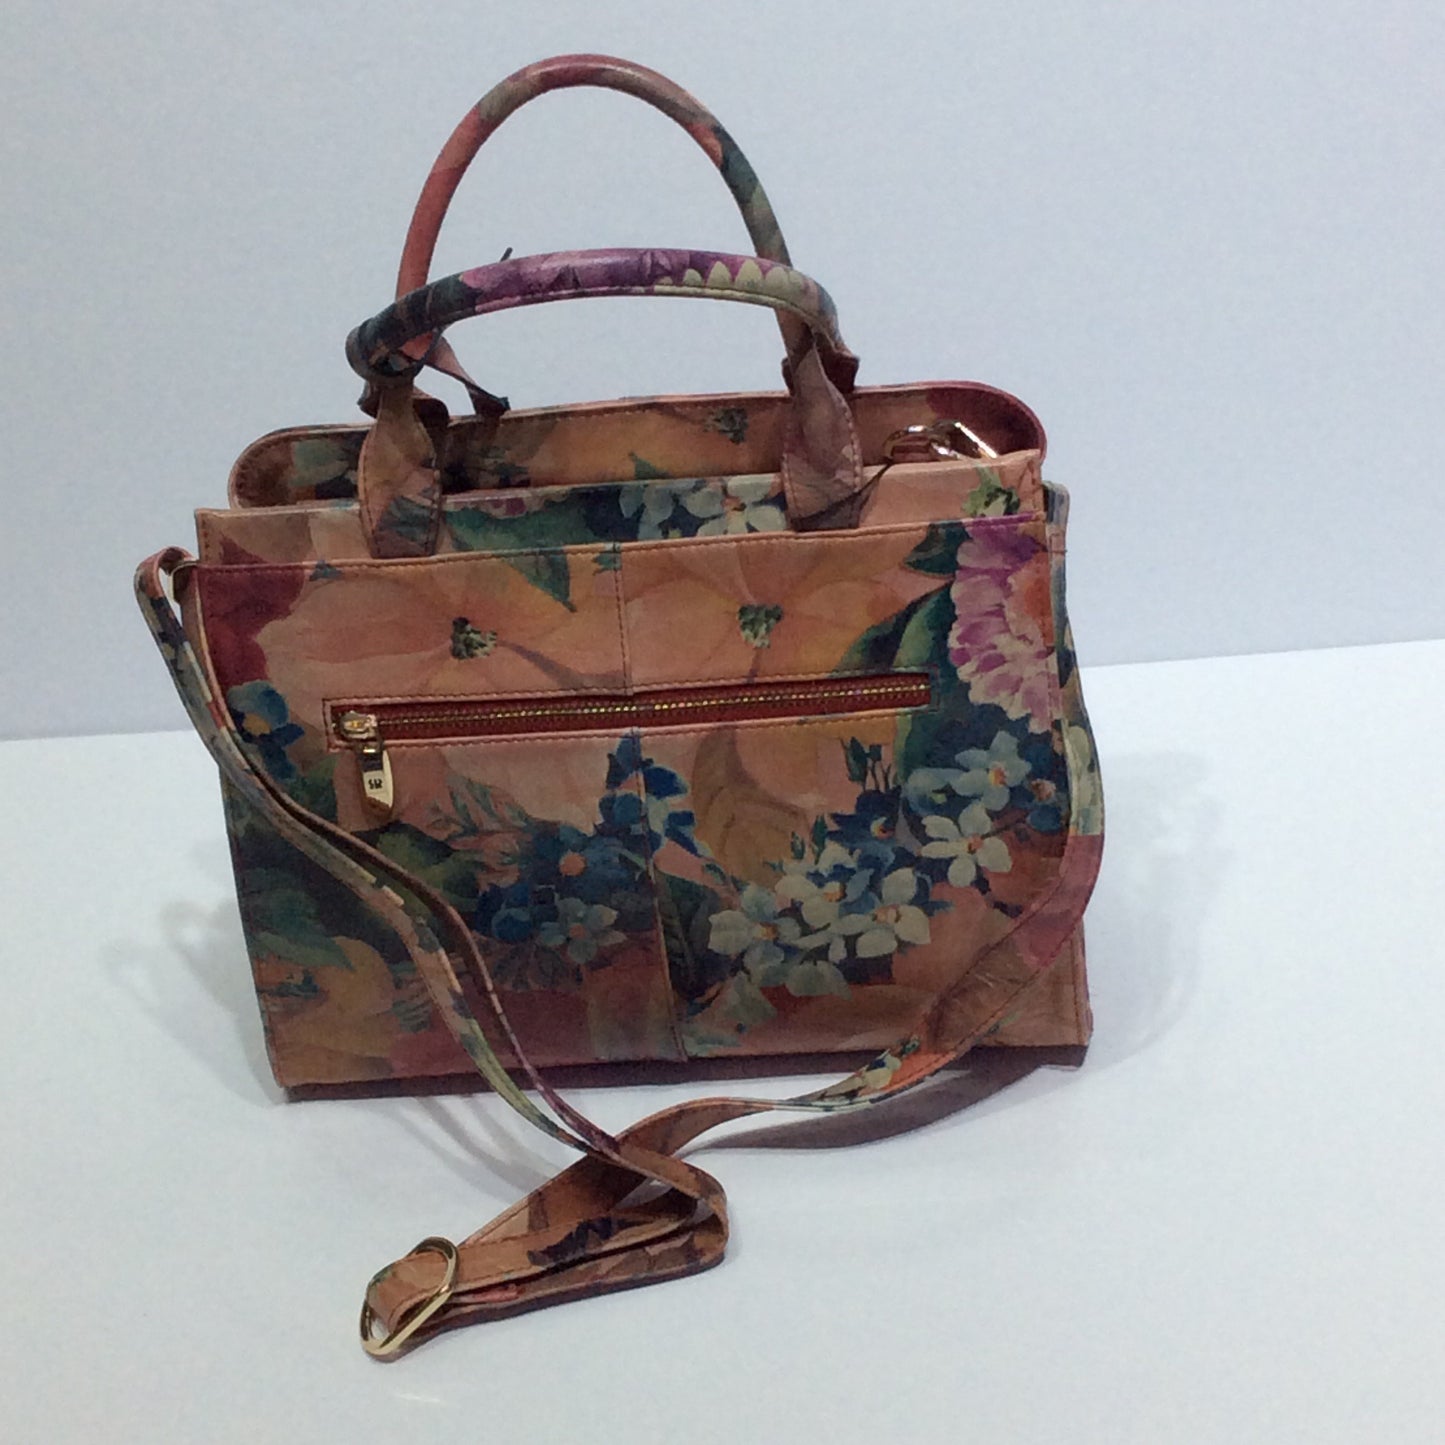 Floral pattern Italian leather purse